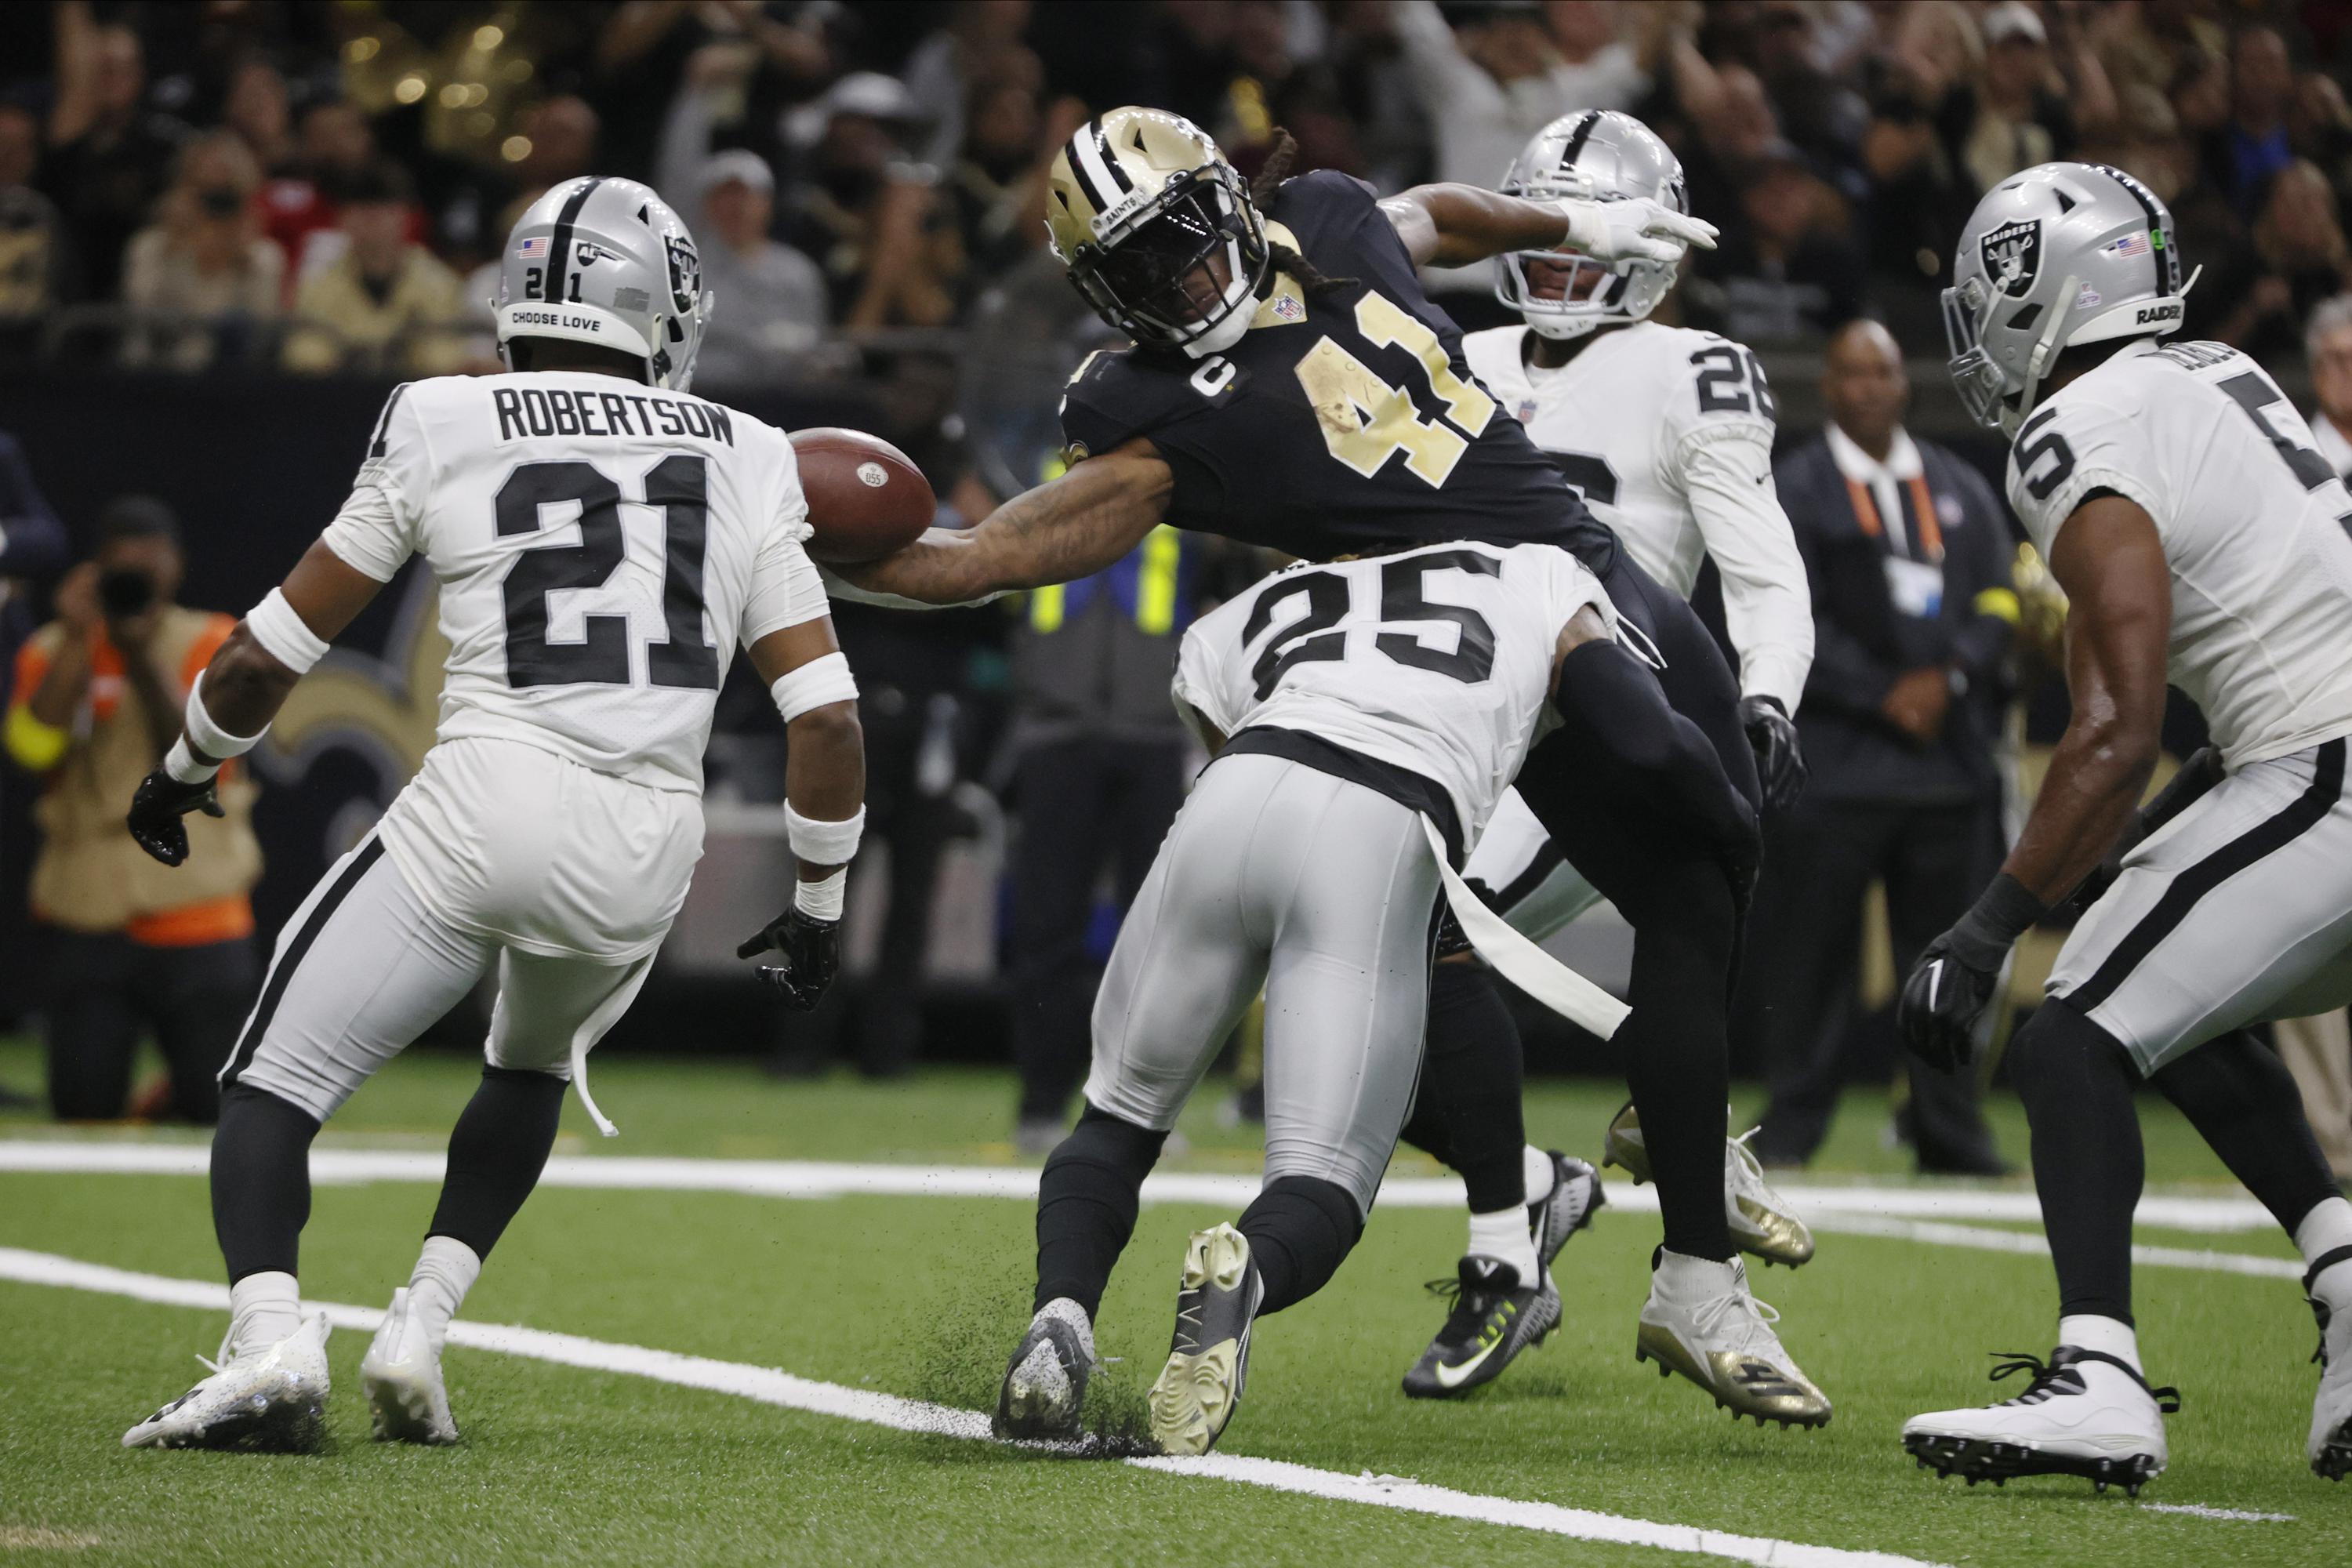 Saints ride Kamara's 3 TDs, defense to 240 win over Raiders AP News